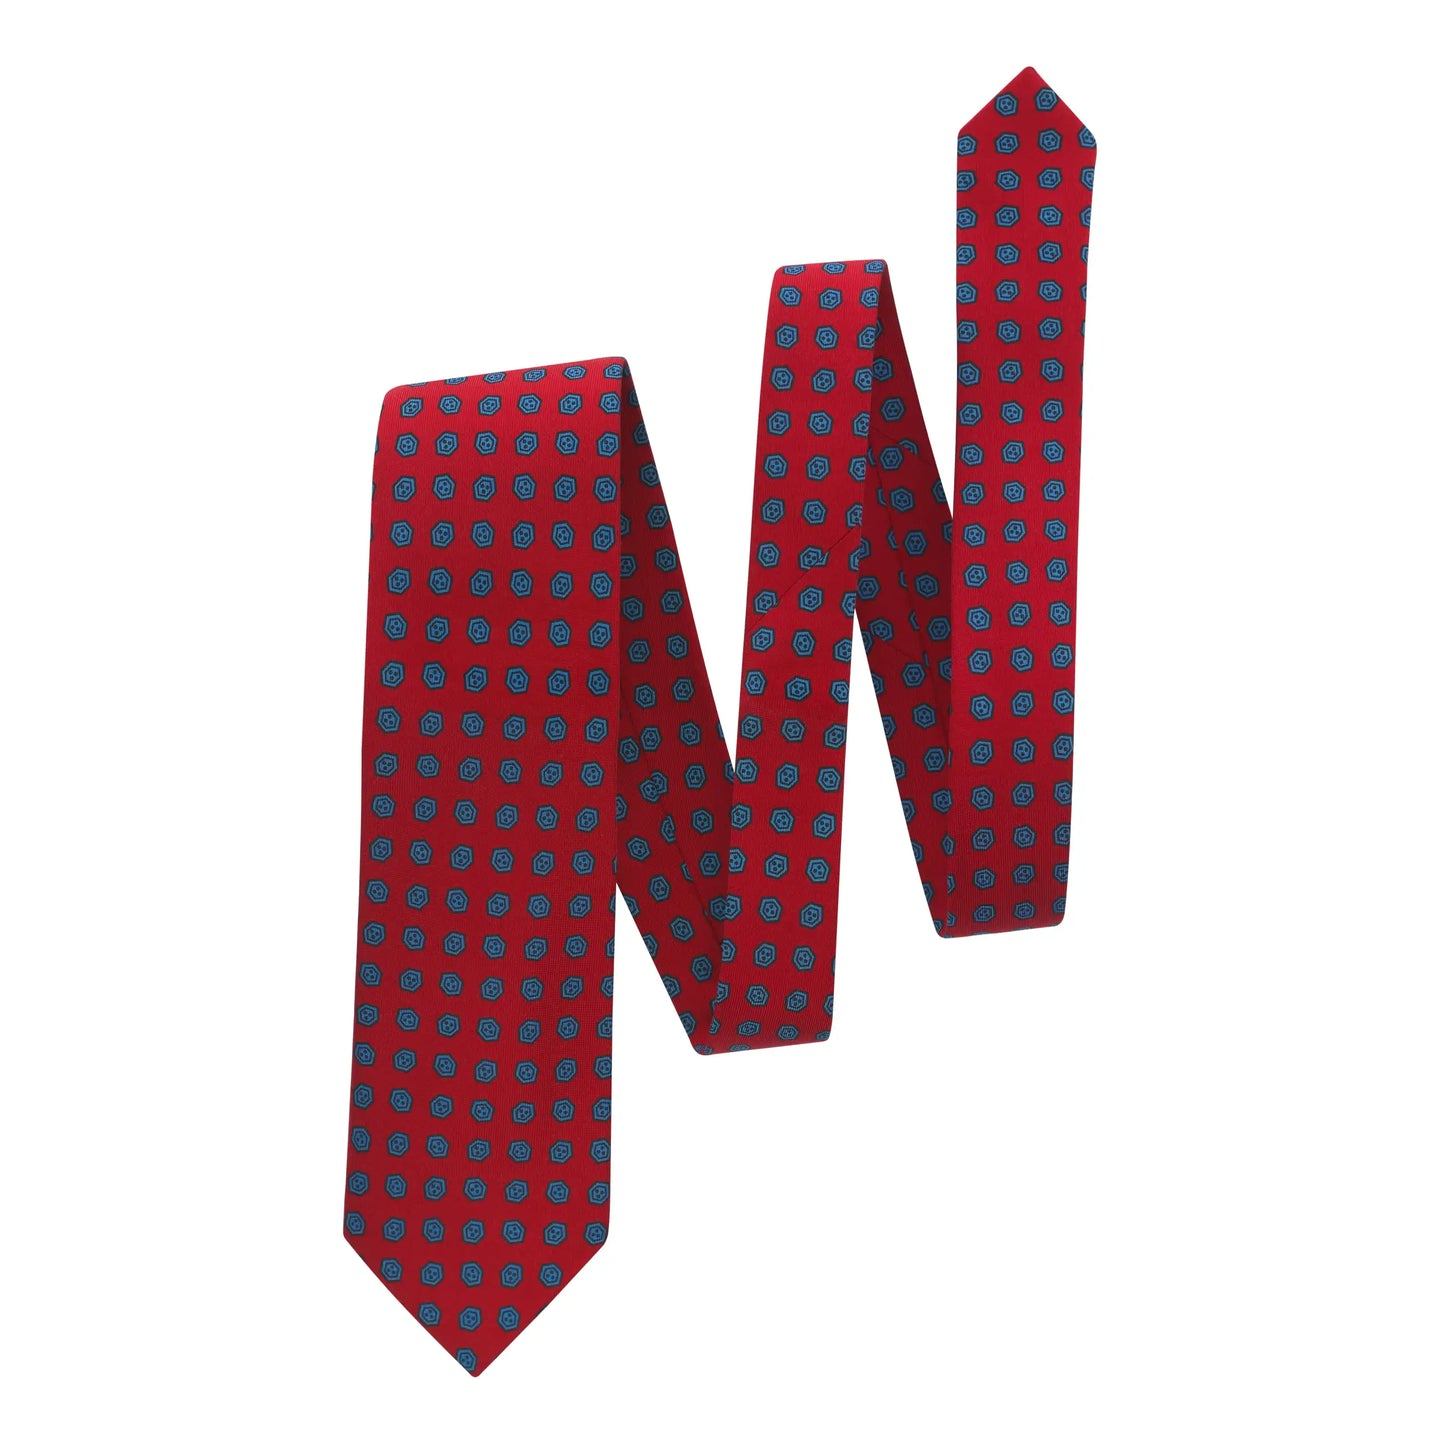 Rote Krawatte aus handbedruckter Seide